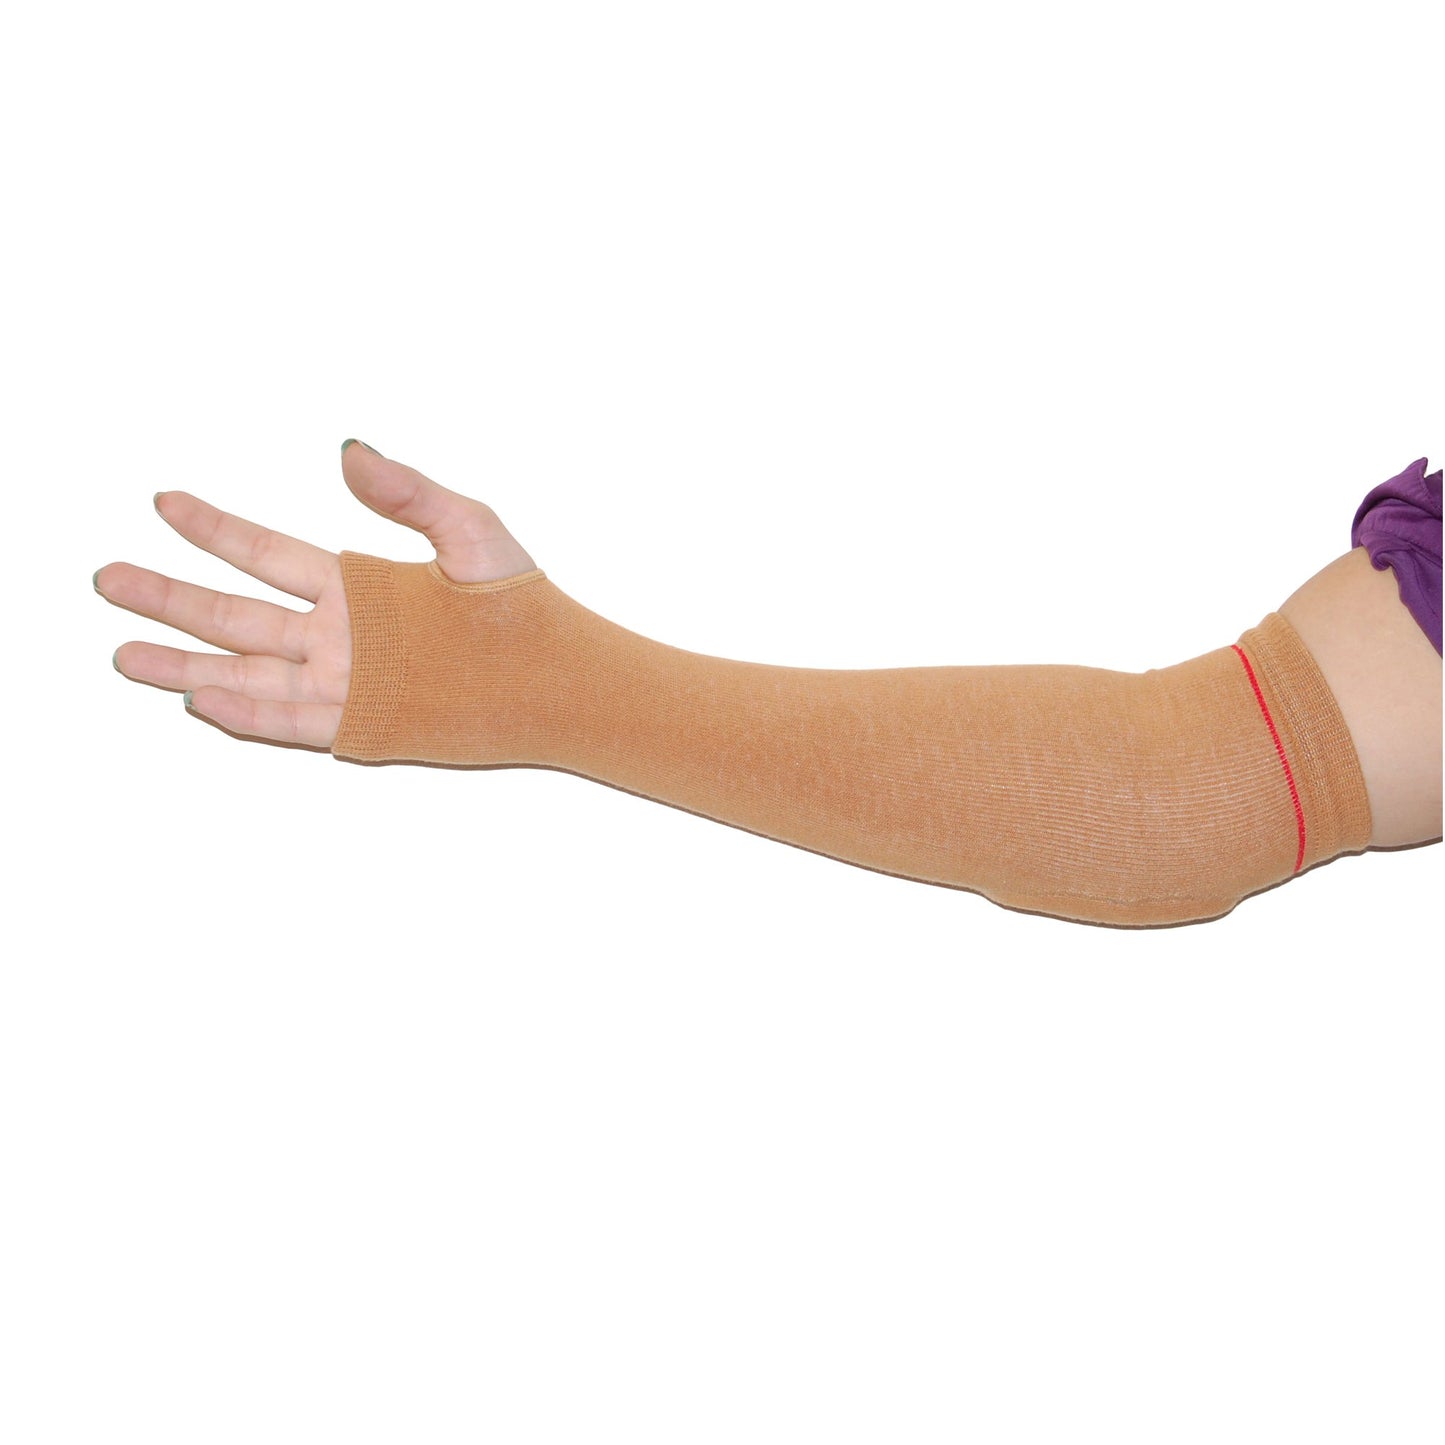 SkiL-Care™ Light Tone Geri-Sleeve - Arm, Small